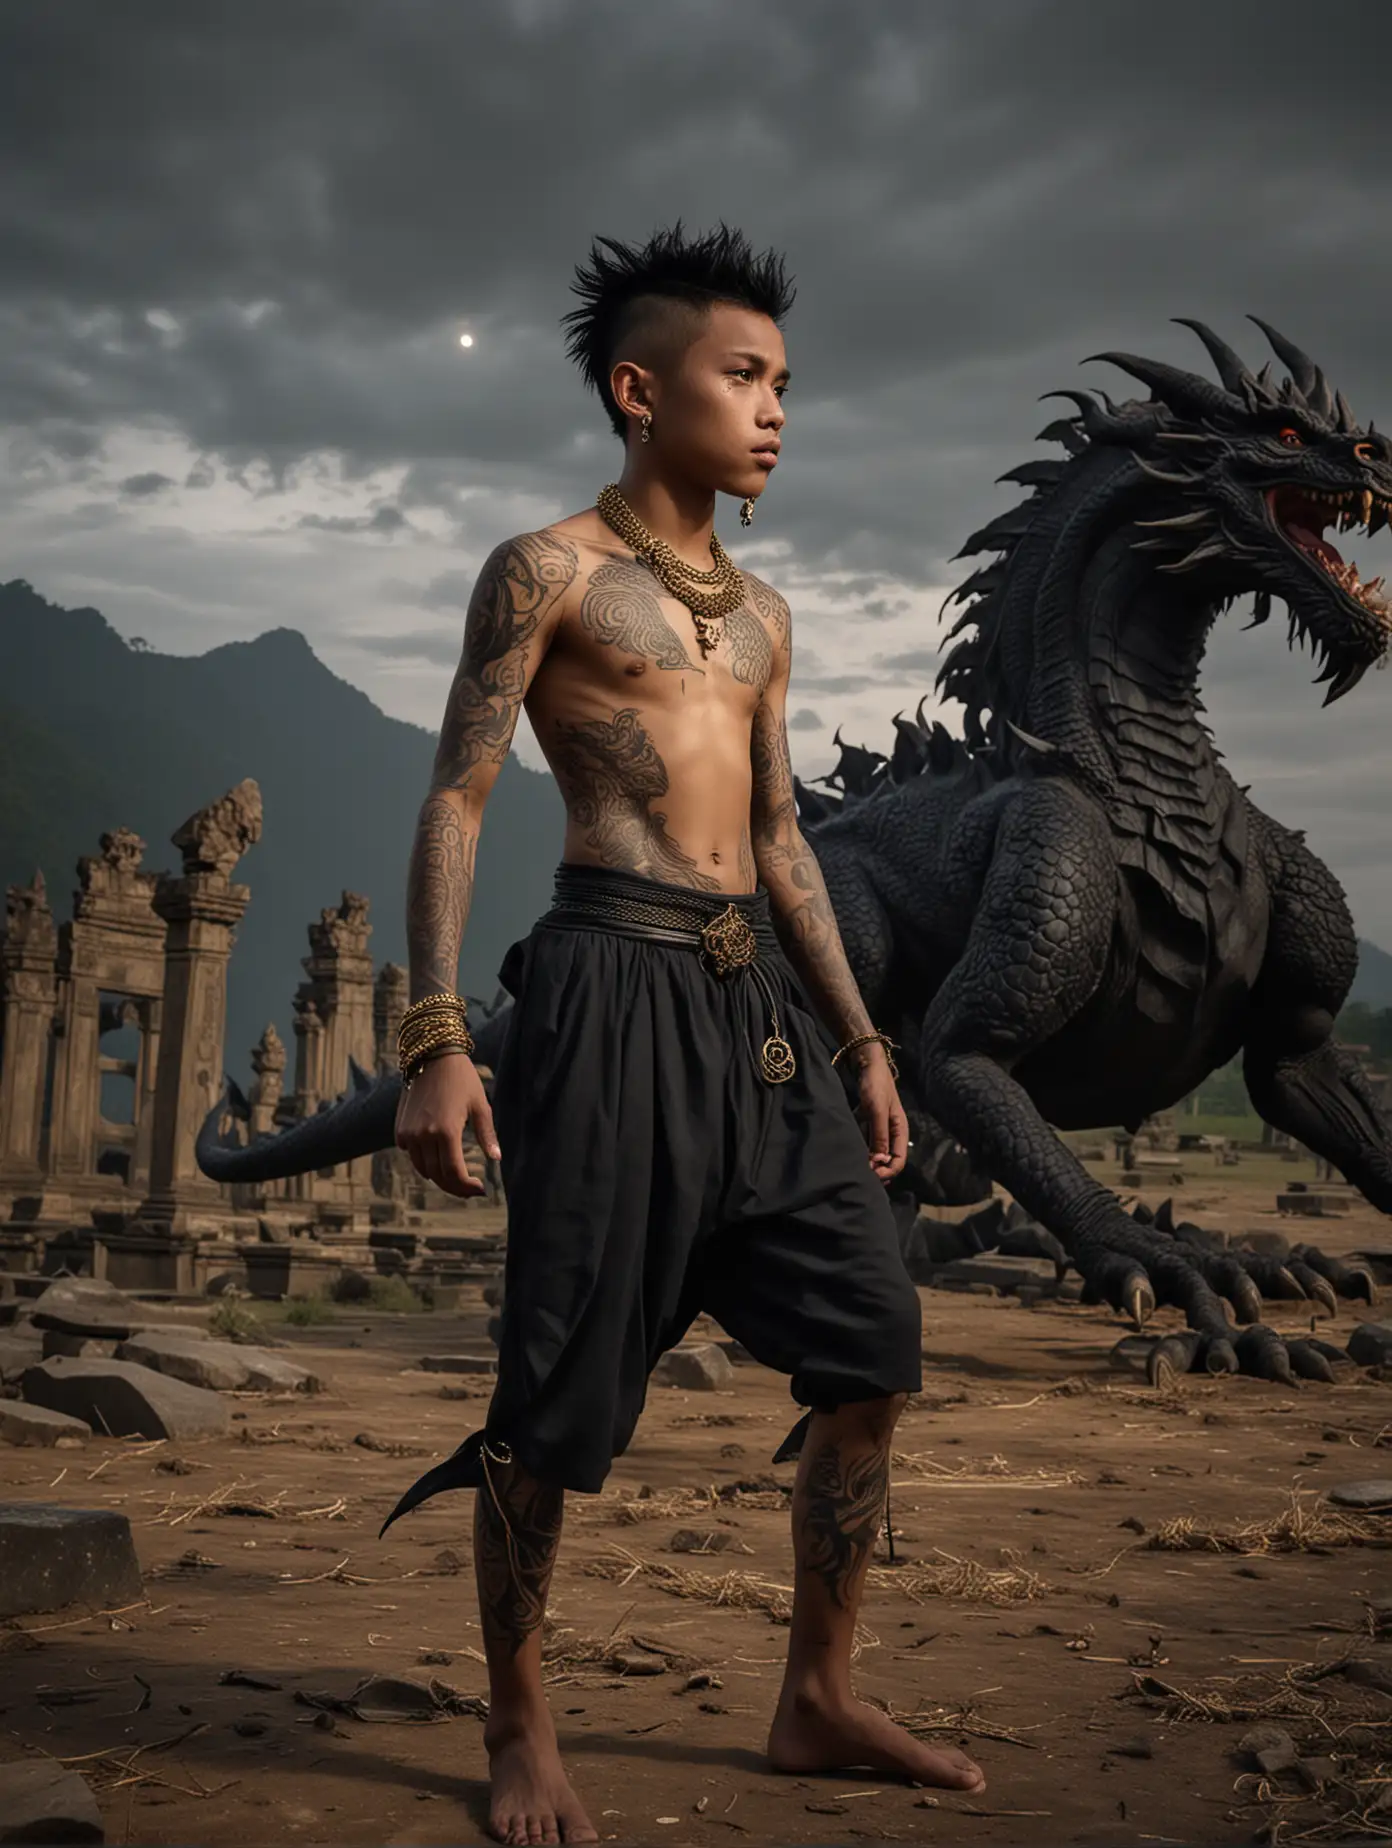 Indonesian-Teenage-Warrior-Battling-Black-Dragon-in-Temple-Ruins-at-Night